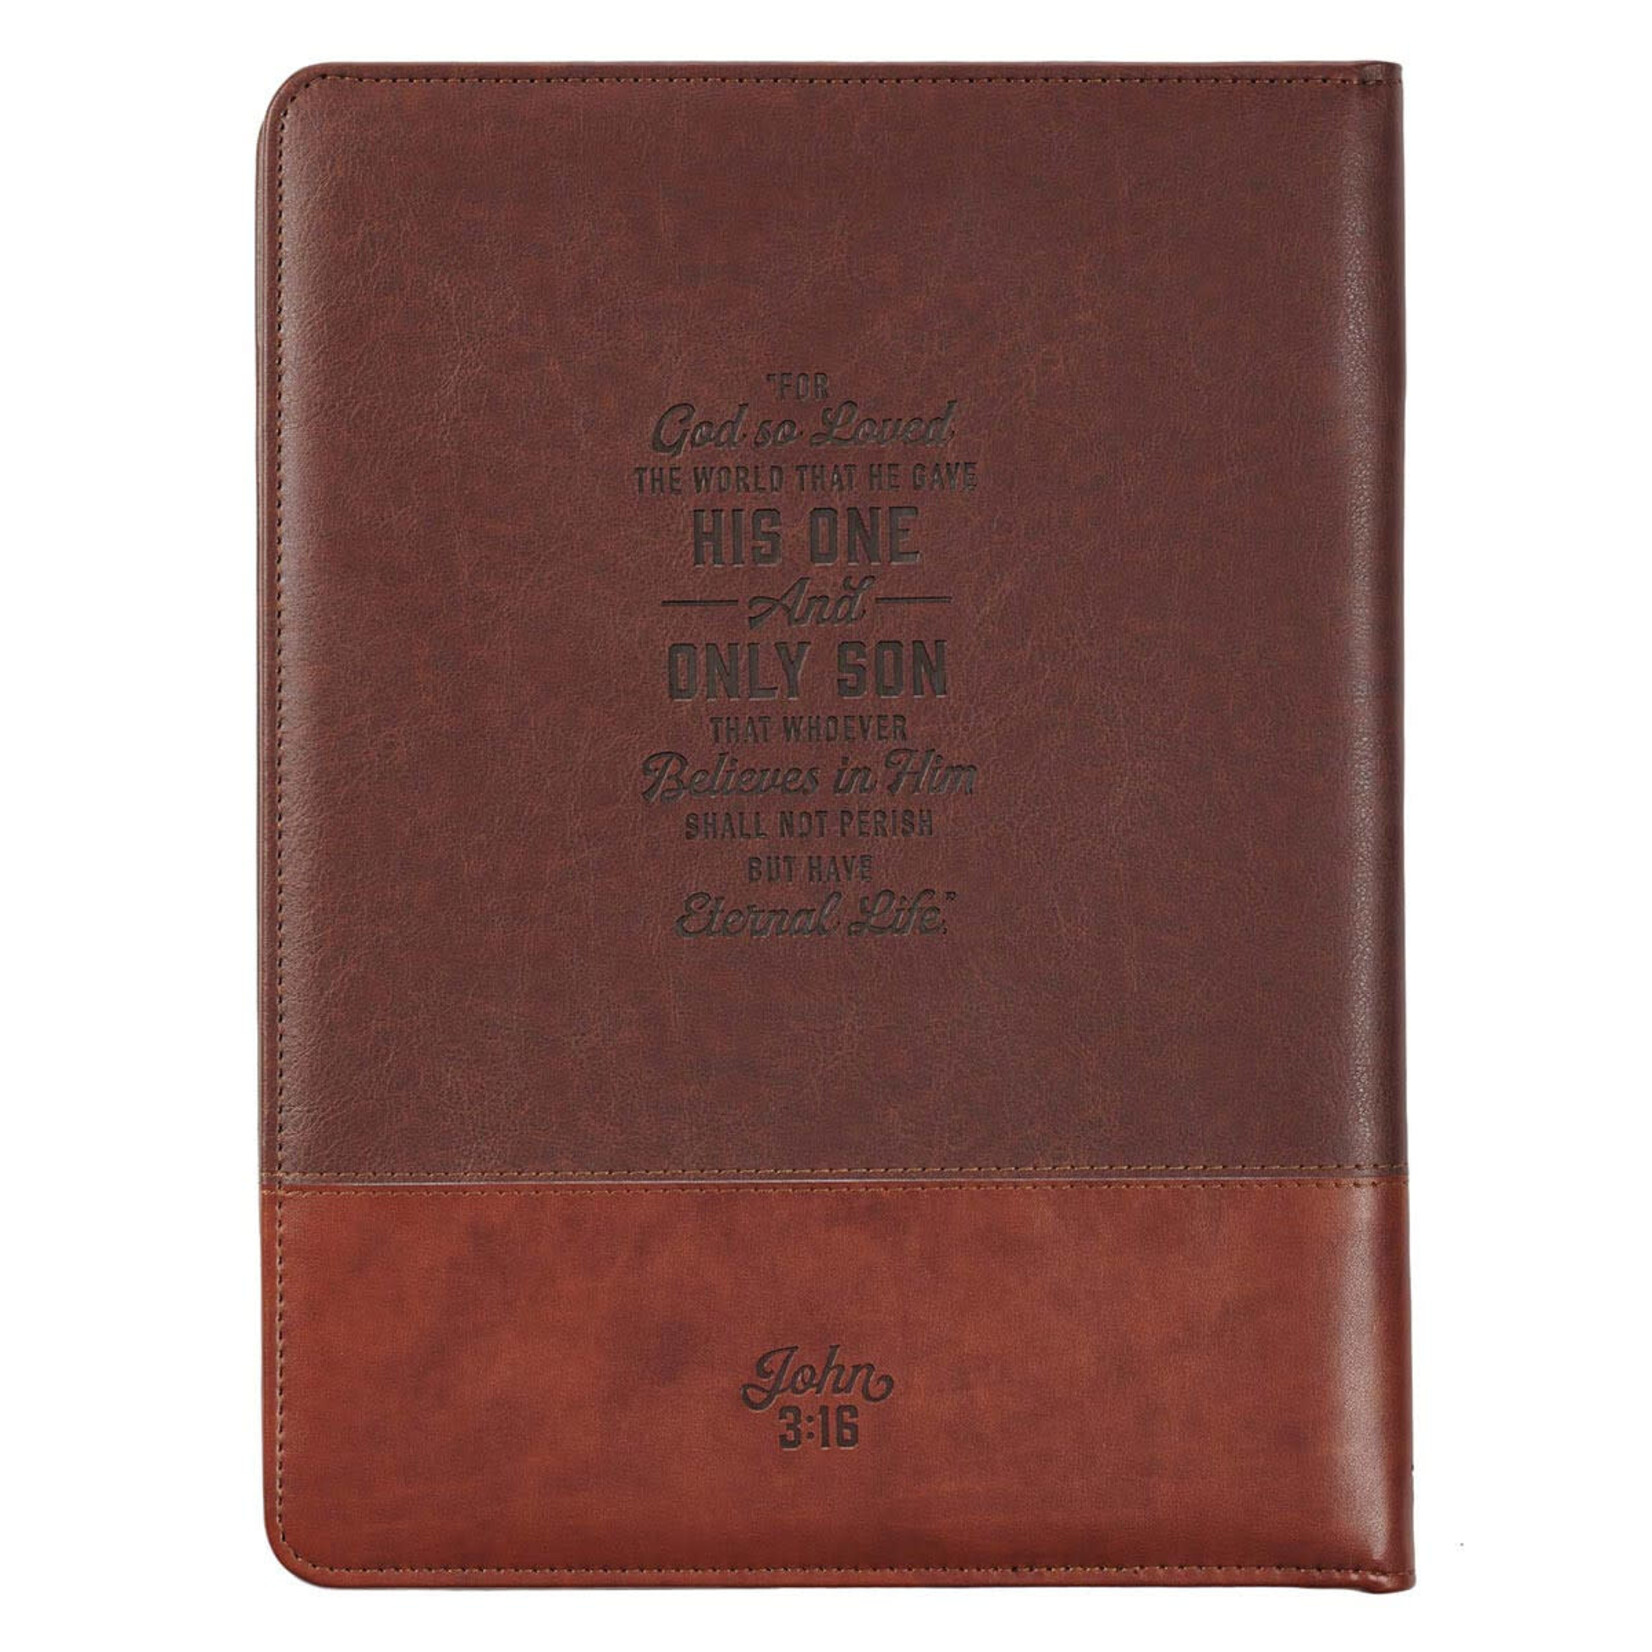 Cross Two-tone Brown Faux Leather Padfolio Folder - John 3:16